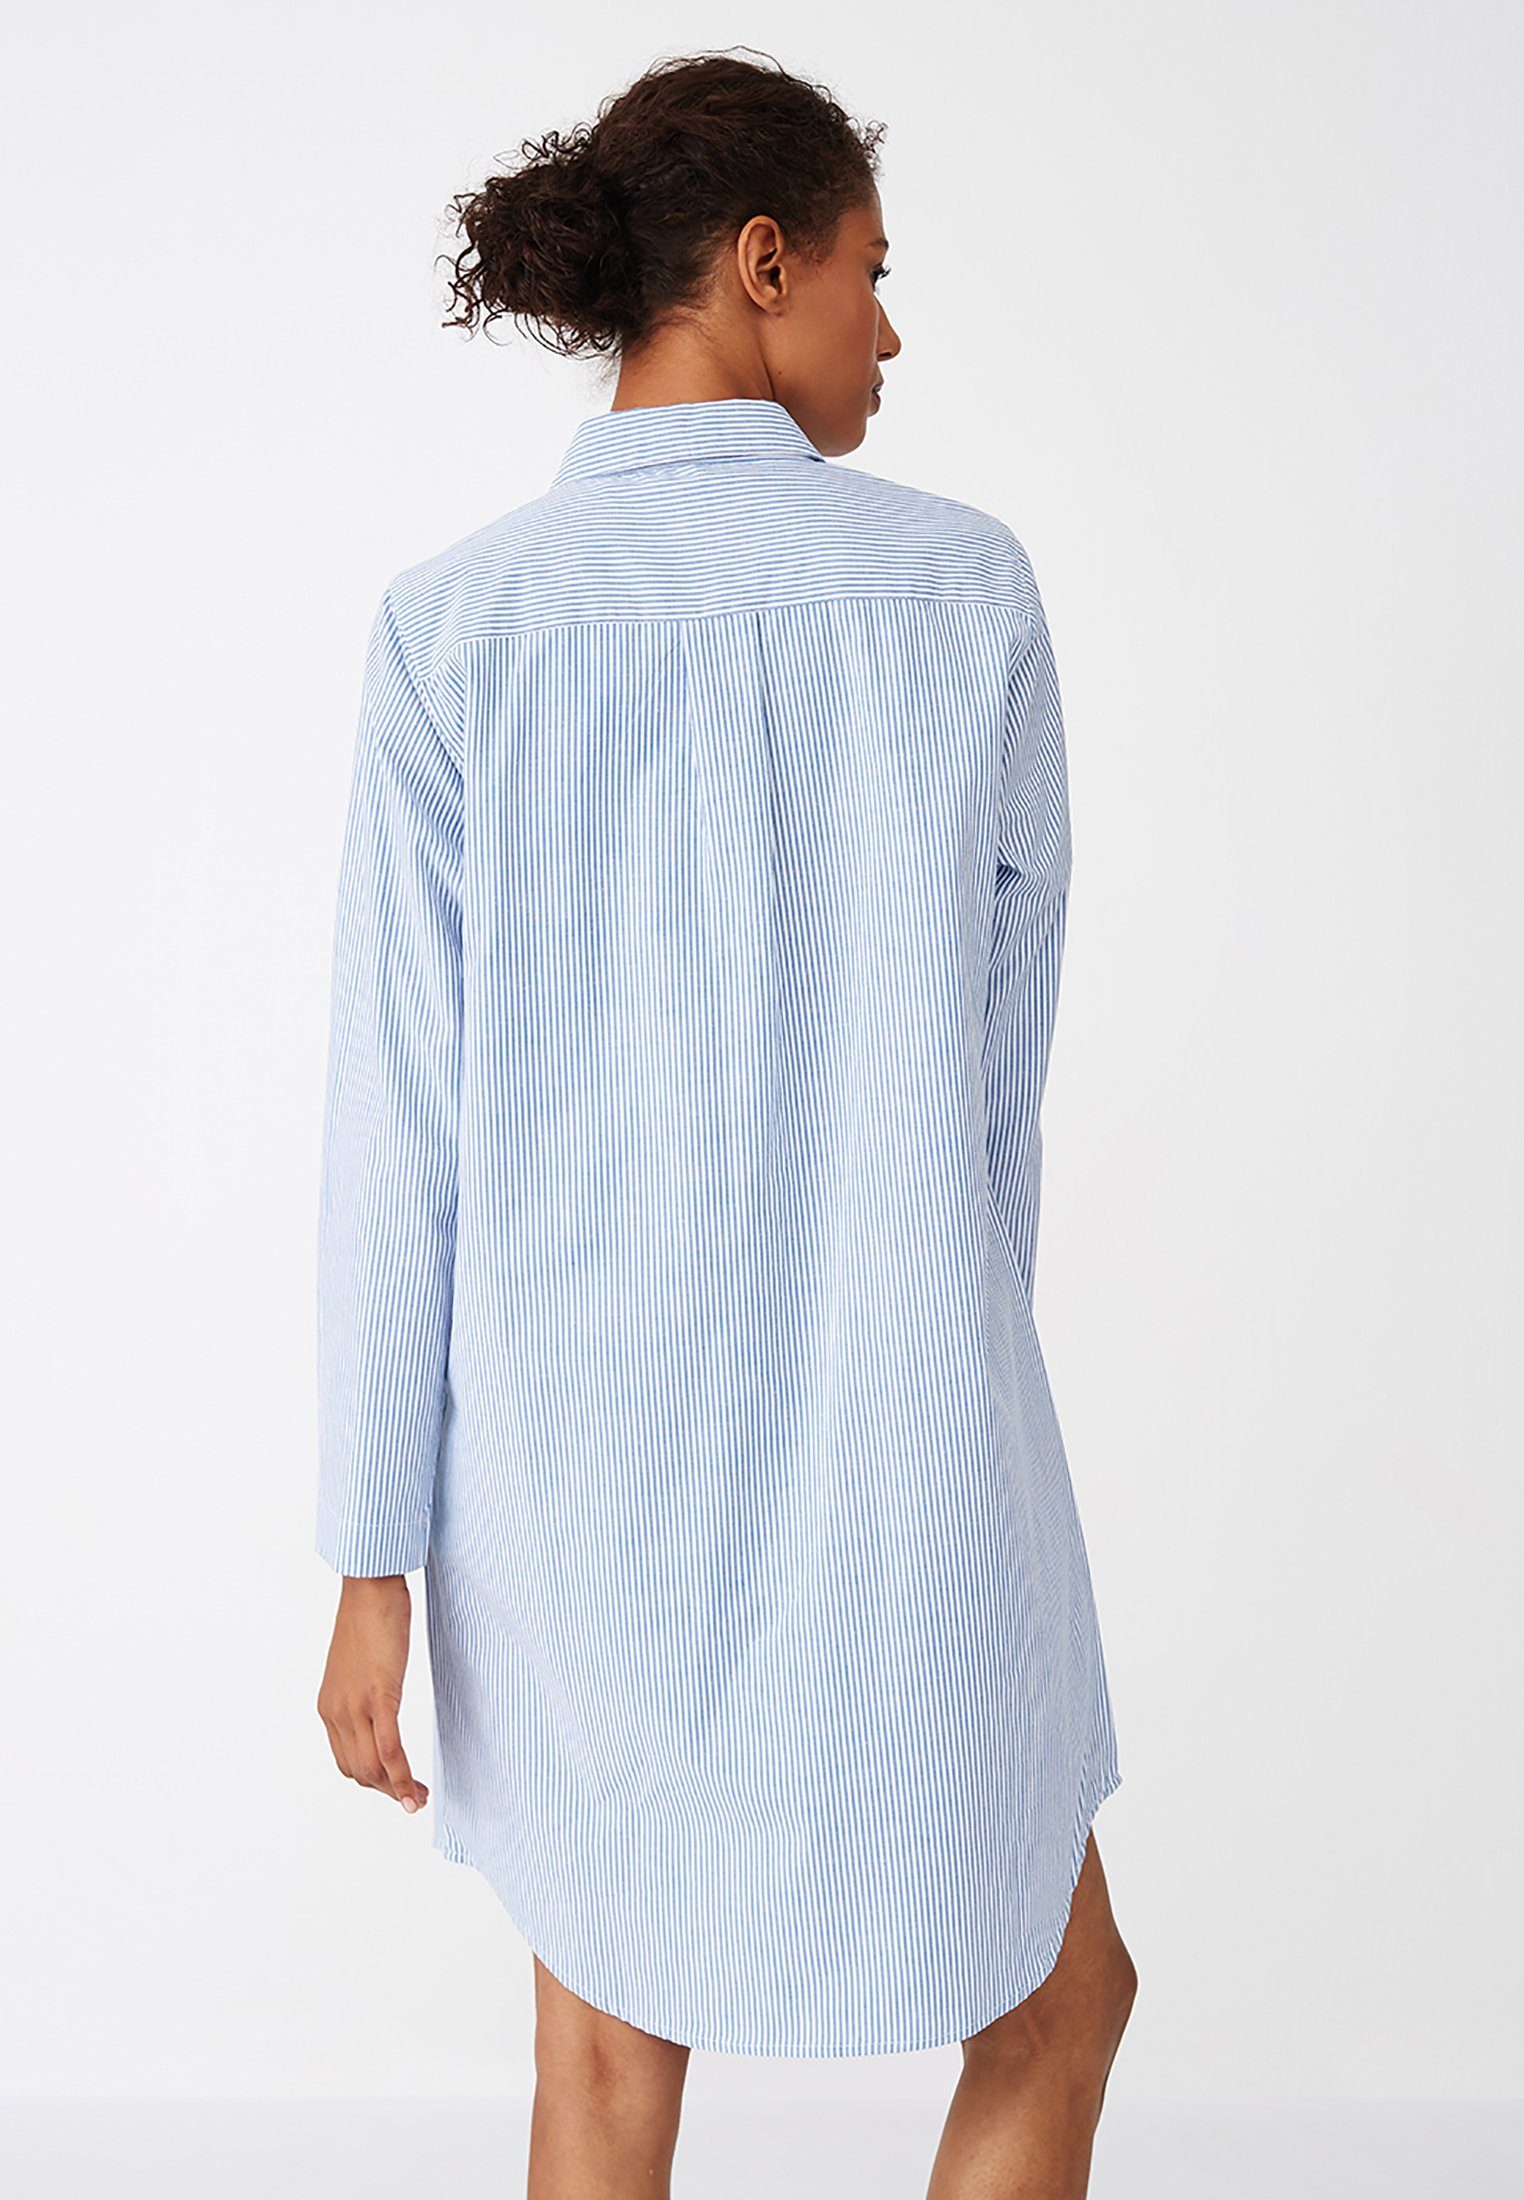 light Lexington blue/white Nachthemd Nightshirt Organic